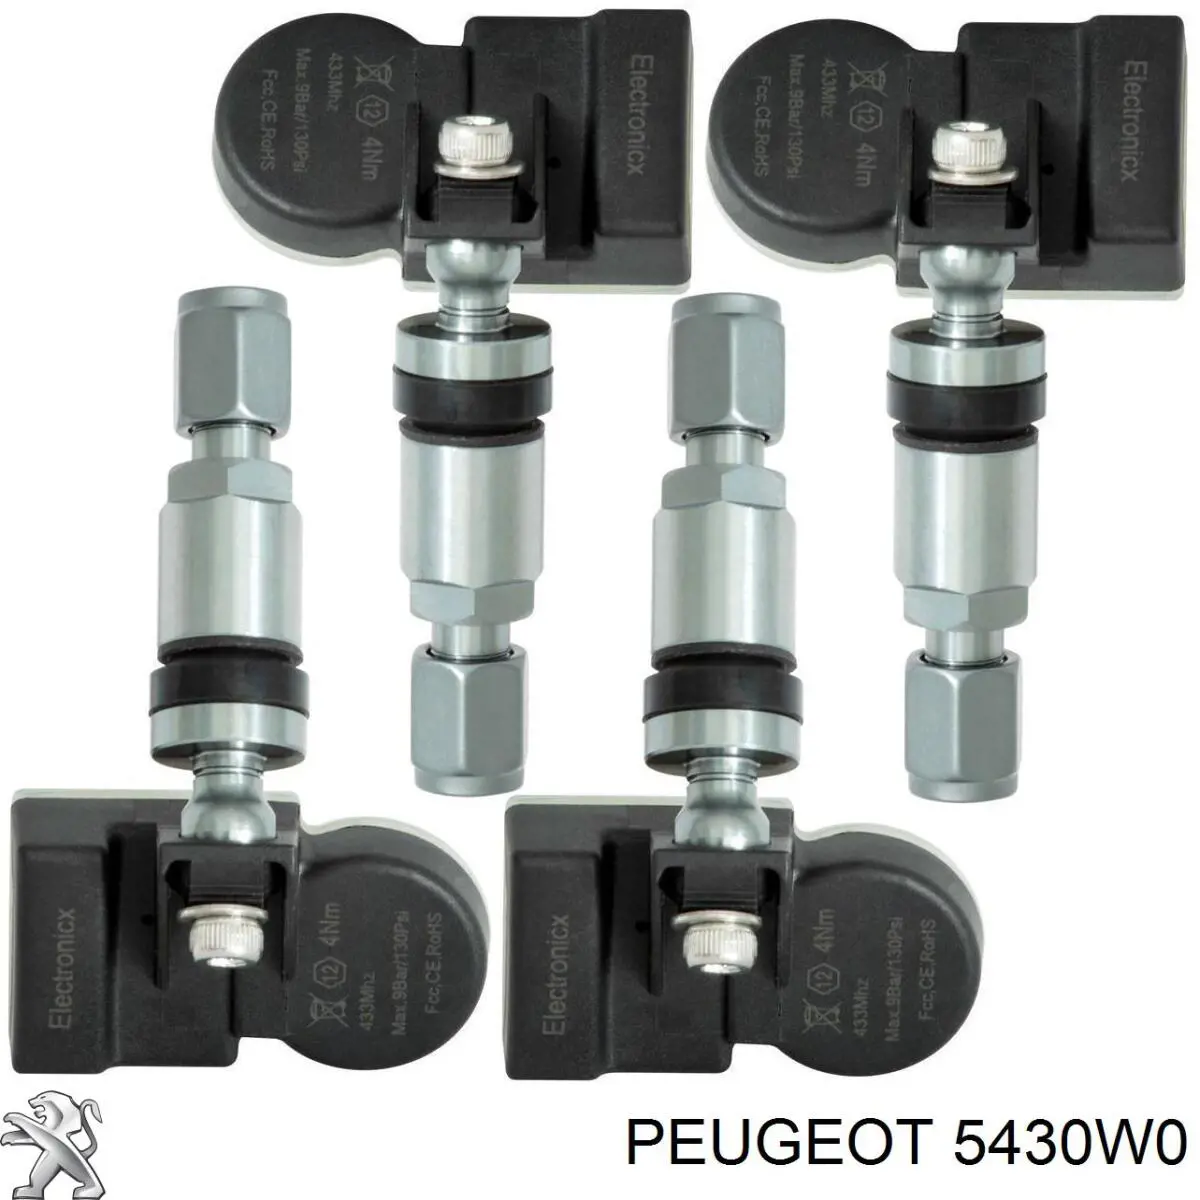 5430W0 Peugeot/Citroen sensor de presion de neumaticos